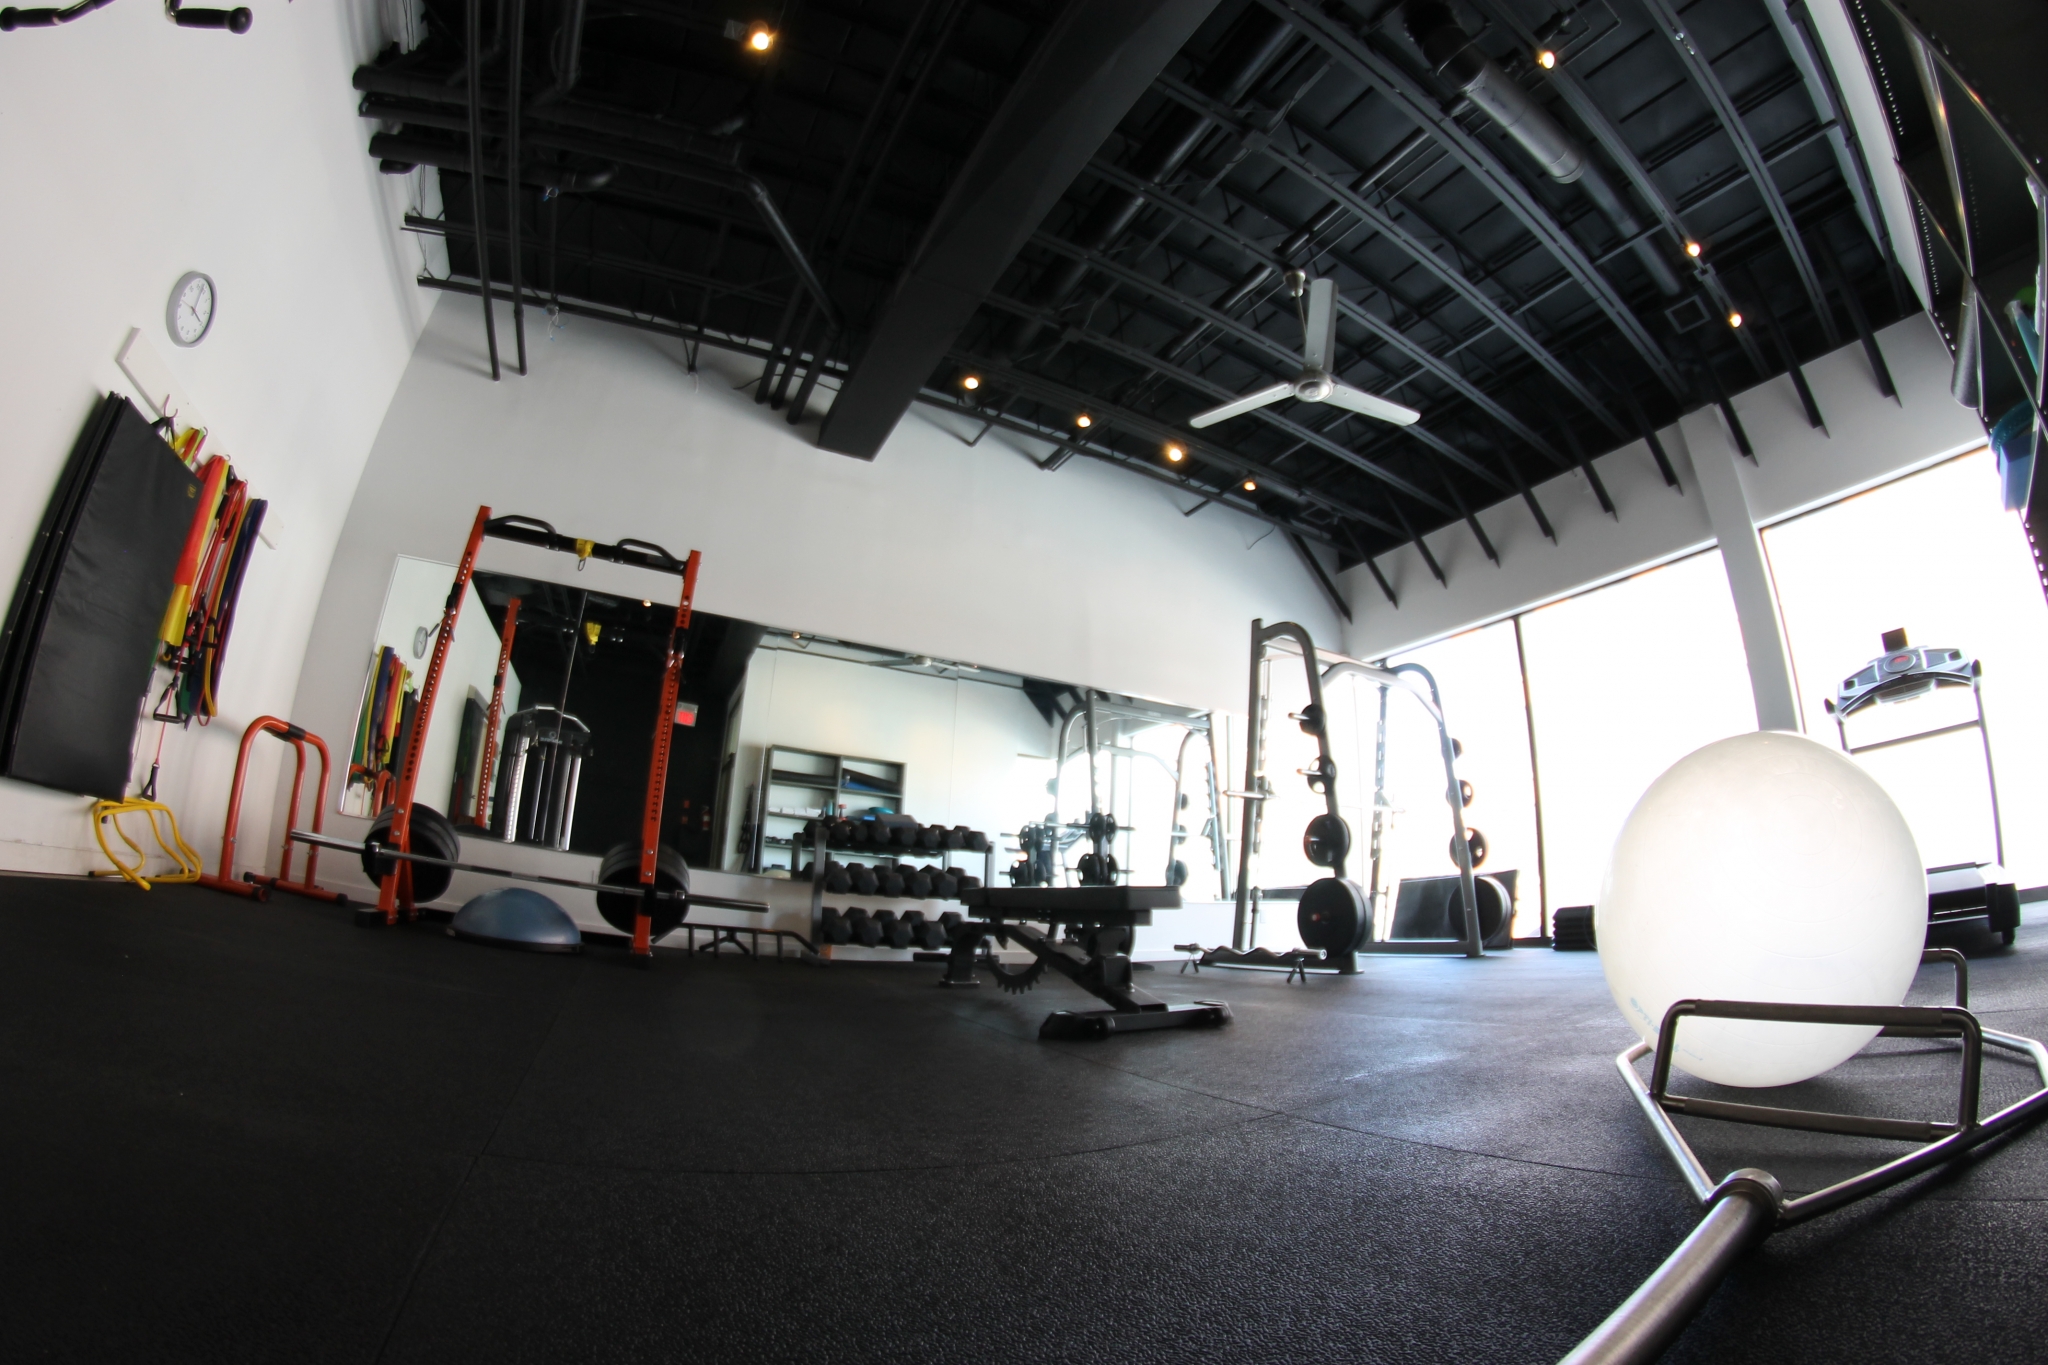 The gym: Internal studio view through fisheye lens